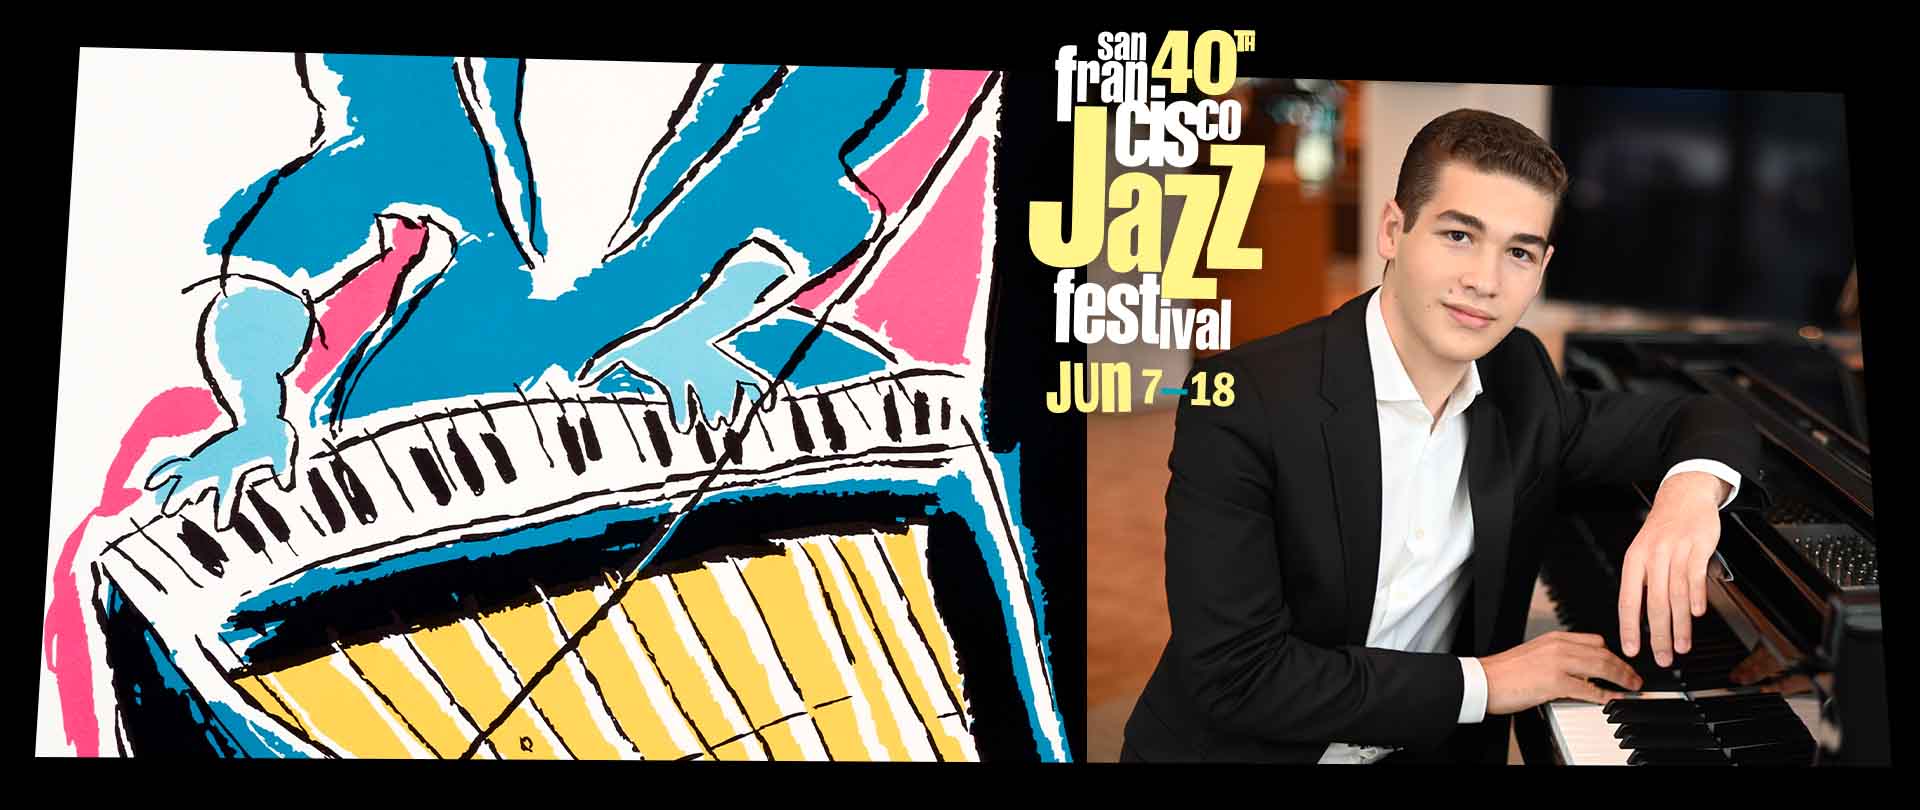 Brandon Goldberg with the 40th San Francisco Jazz Festival logo